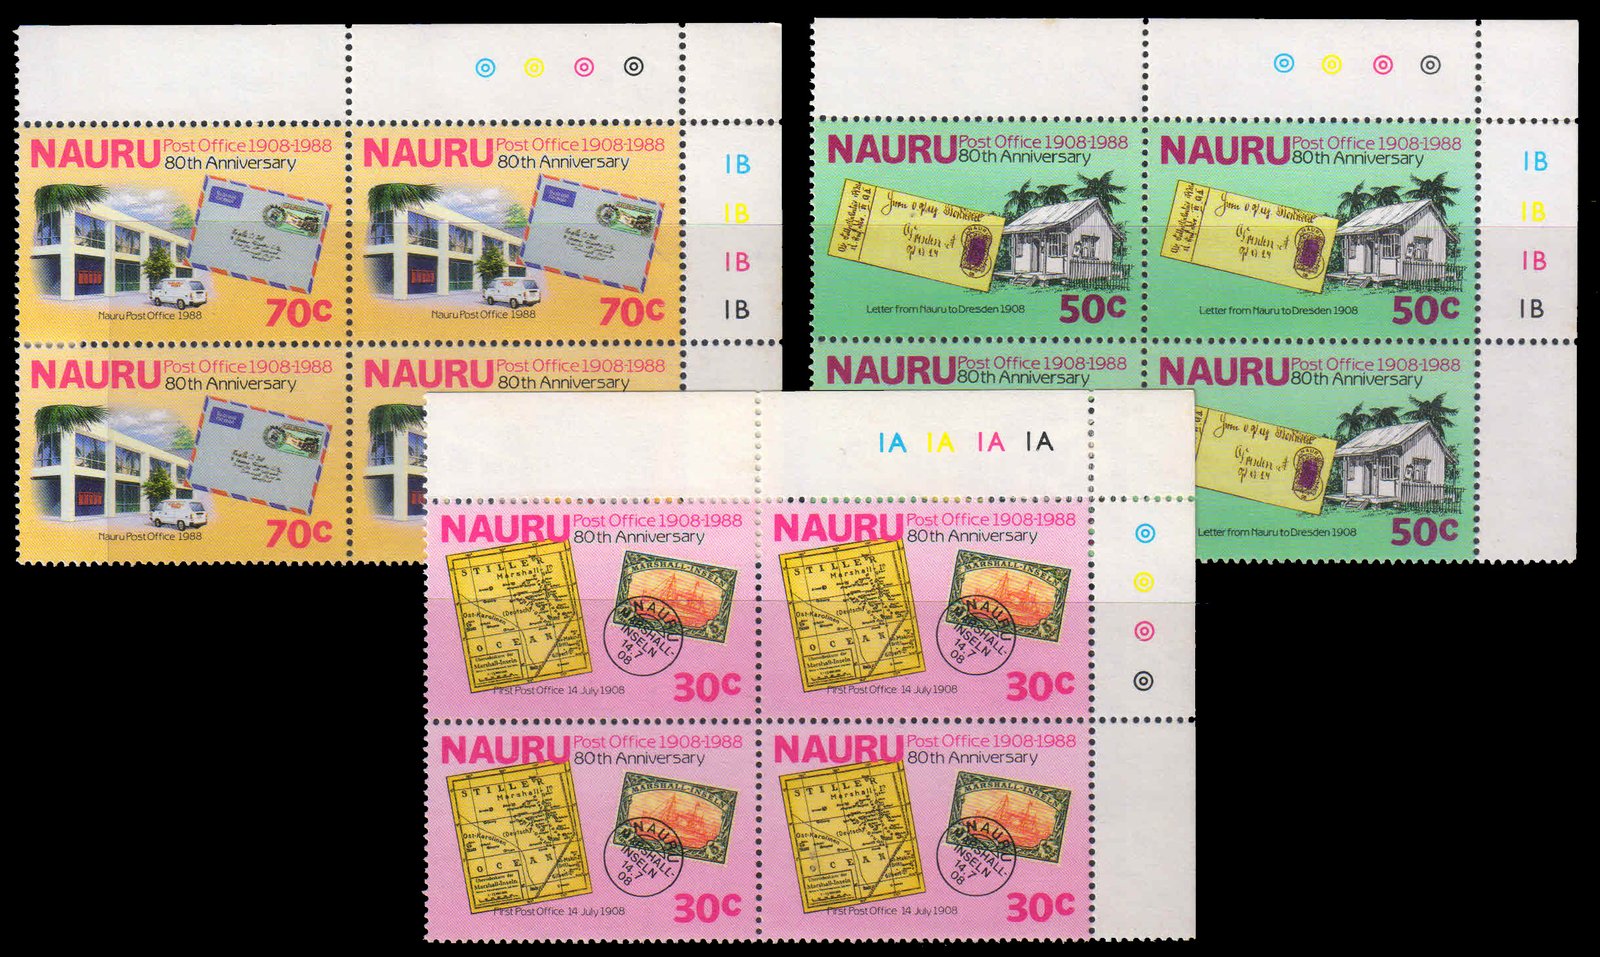 NAURU 1988-Nauru Post Office, Airmail Letters & Stamp on Stamp-Set of 3 Corner Blocks, 2nd Position, MNH, S.G. 362-364